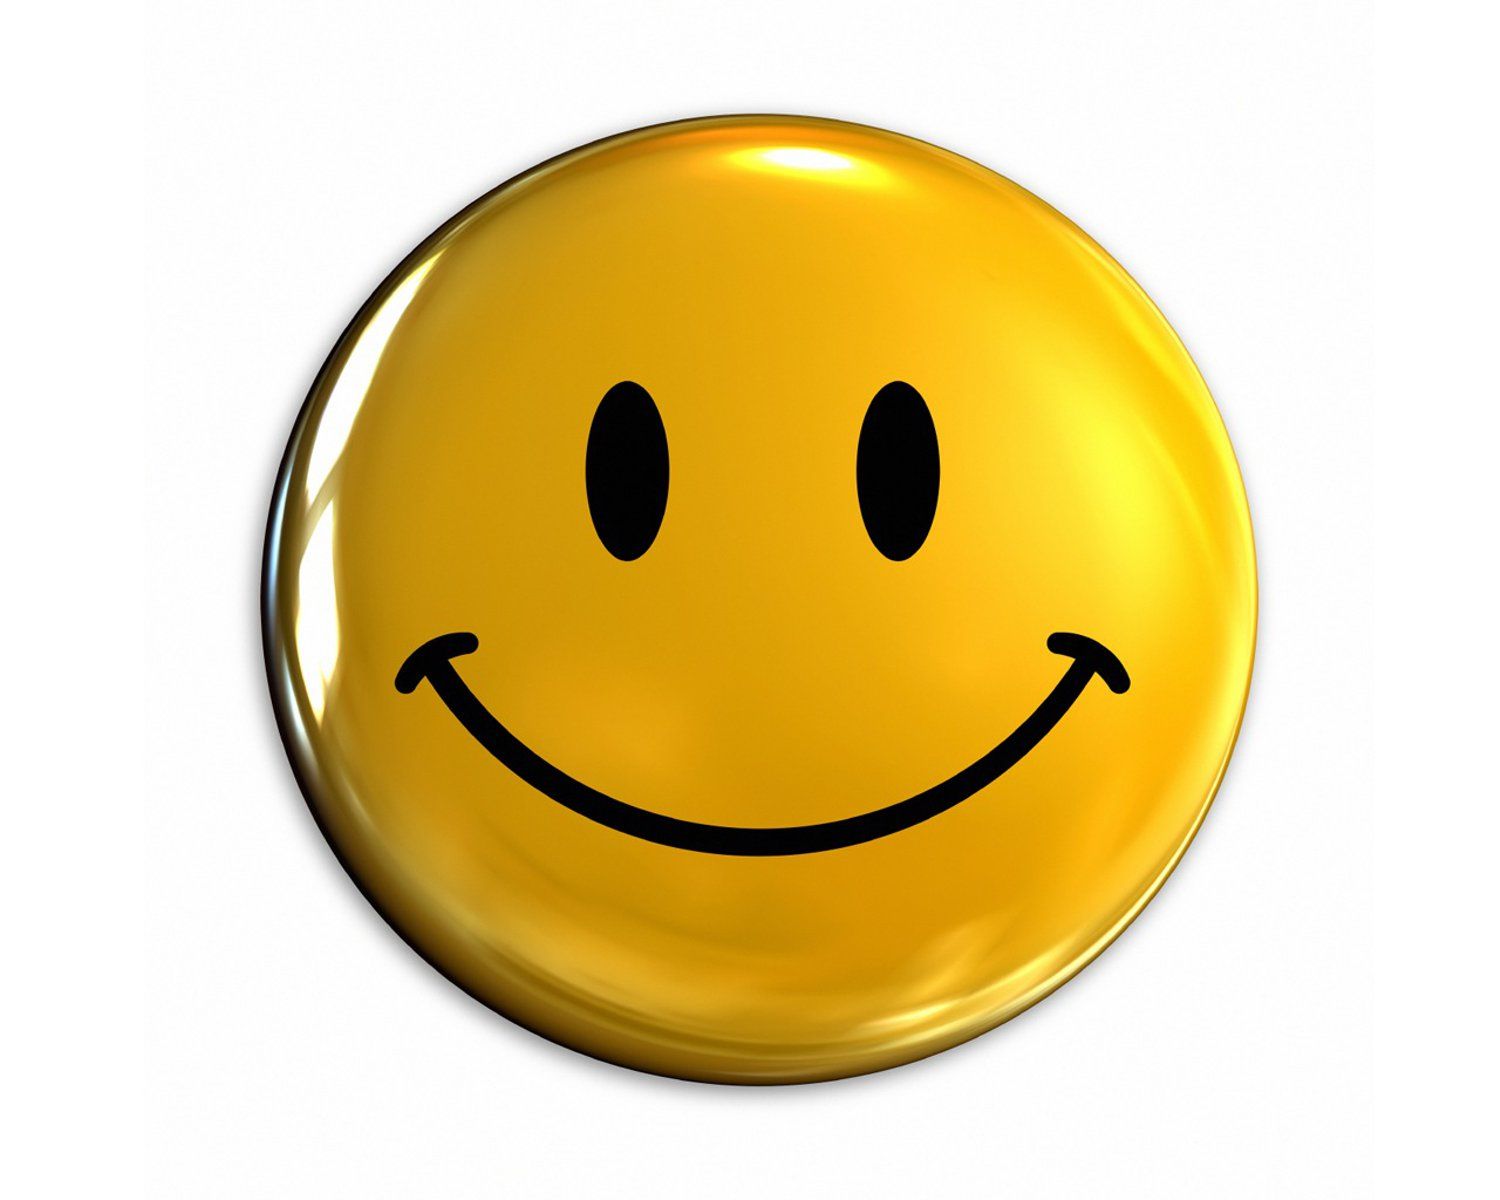 Smiley face wallpaper hd - www. - ClipArt Best - ClipArt Best